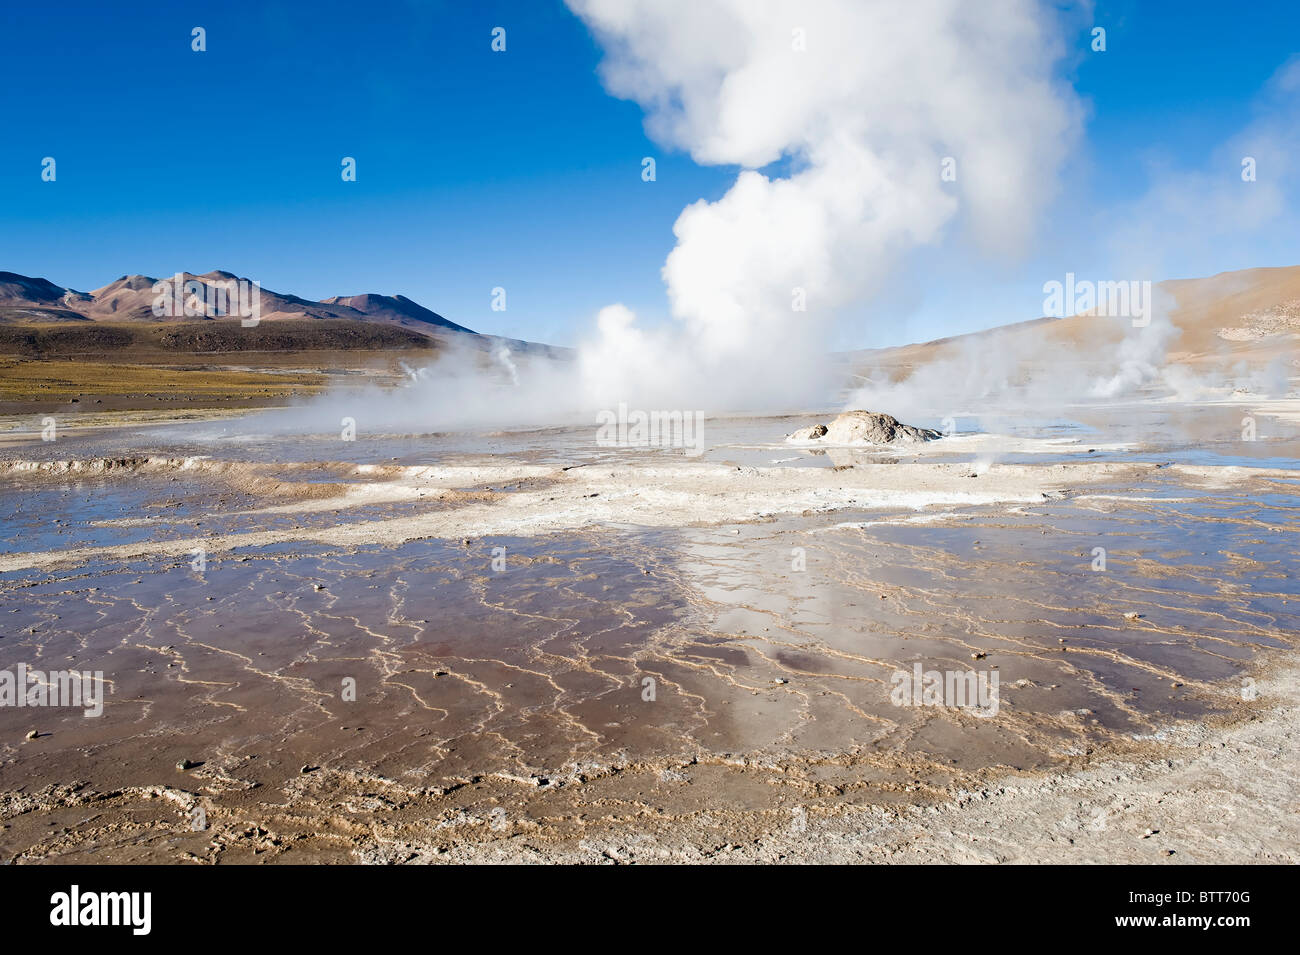 Des geysers El Tatio, Désert d'Atacama, Chili, région Antofagasto Banque D'Images